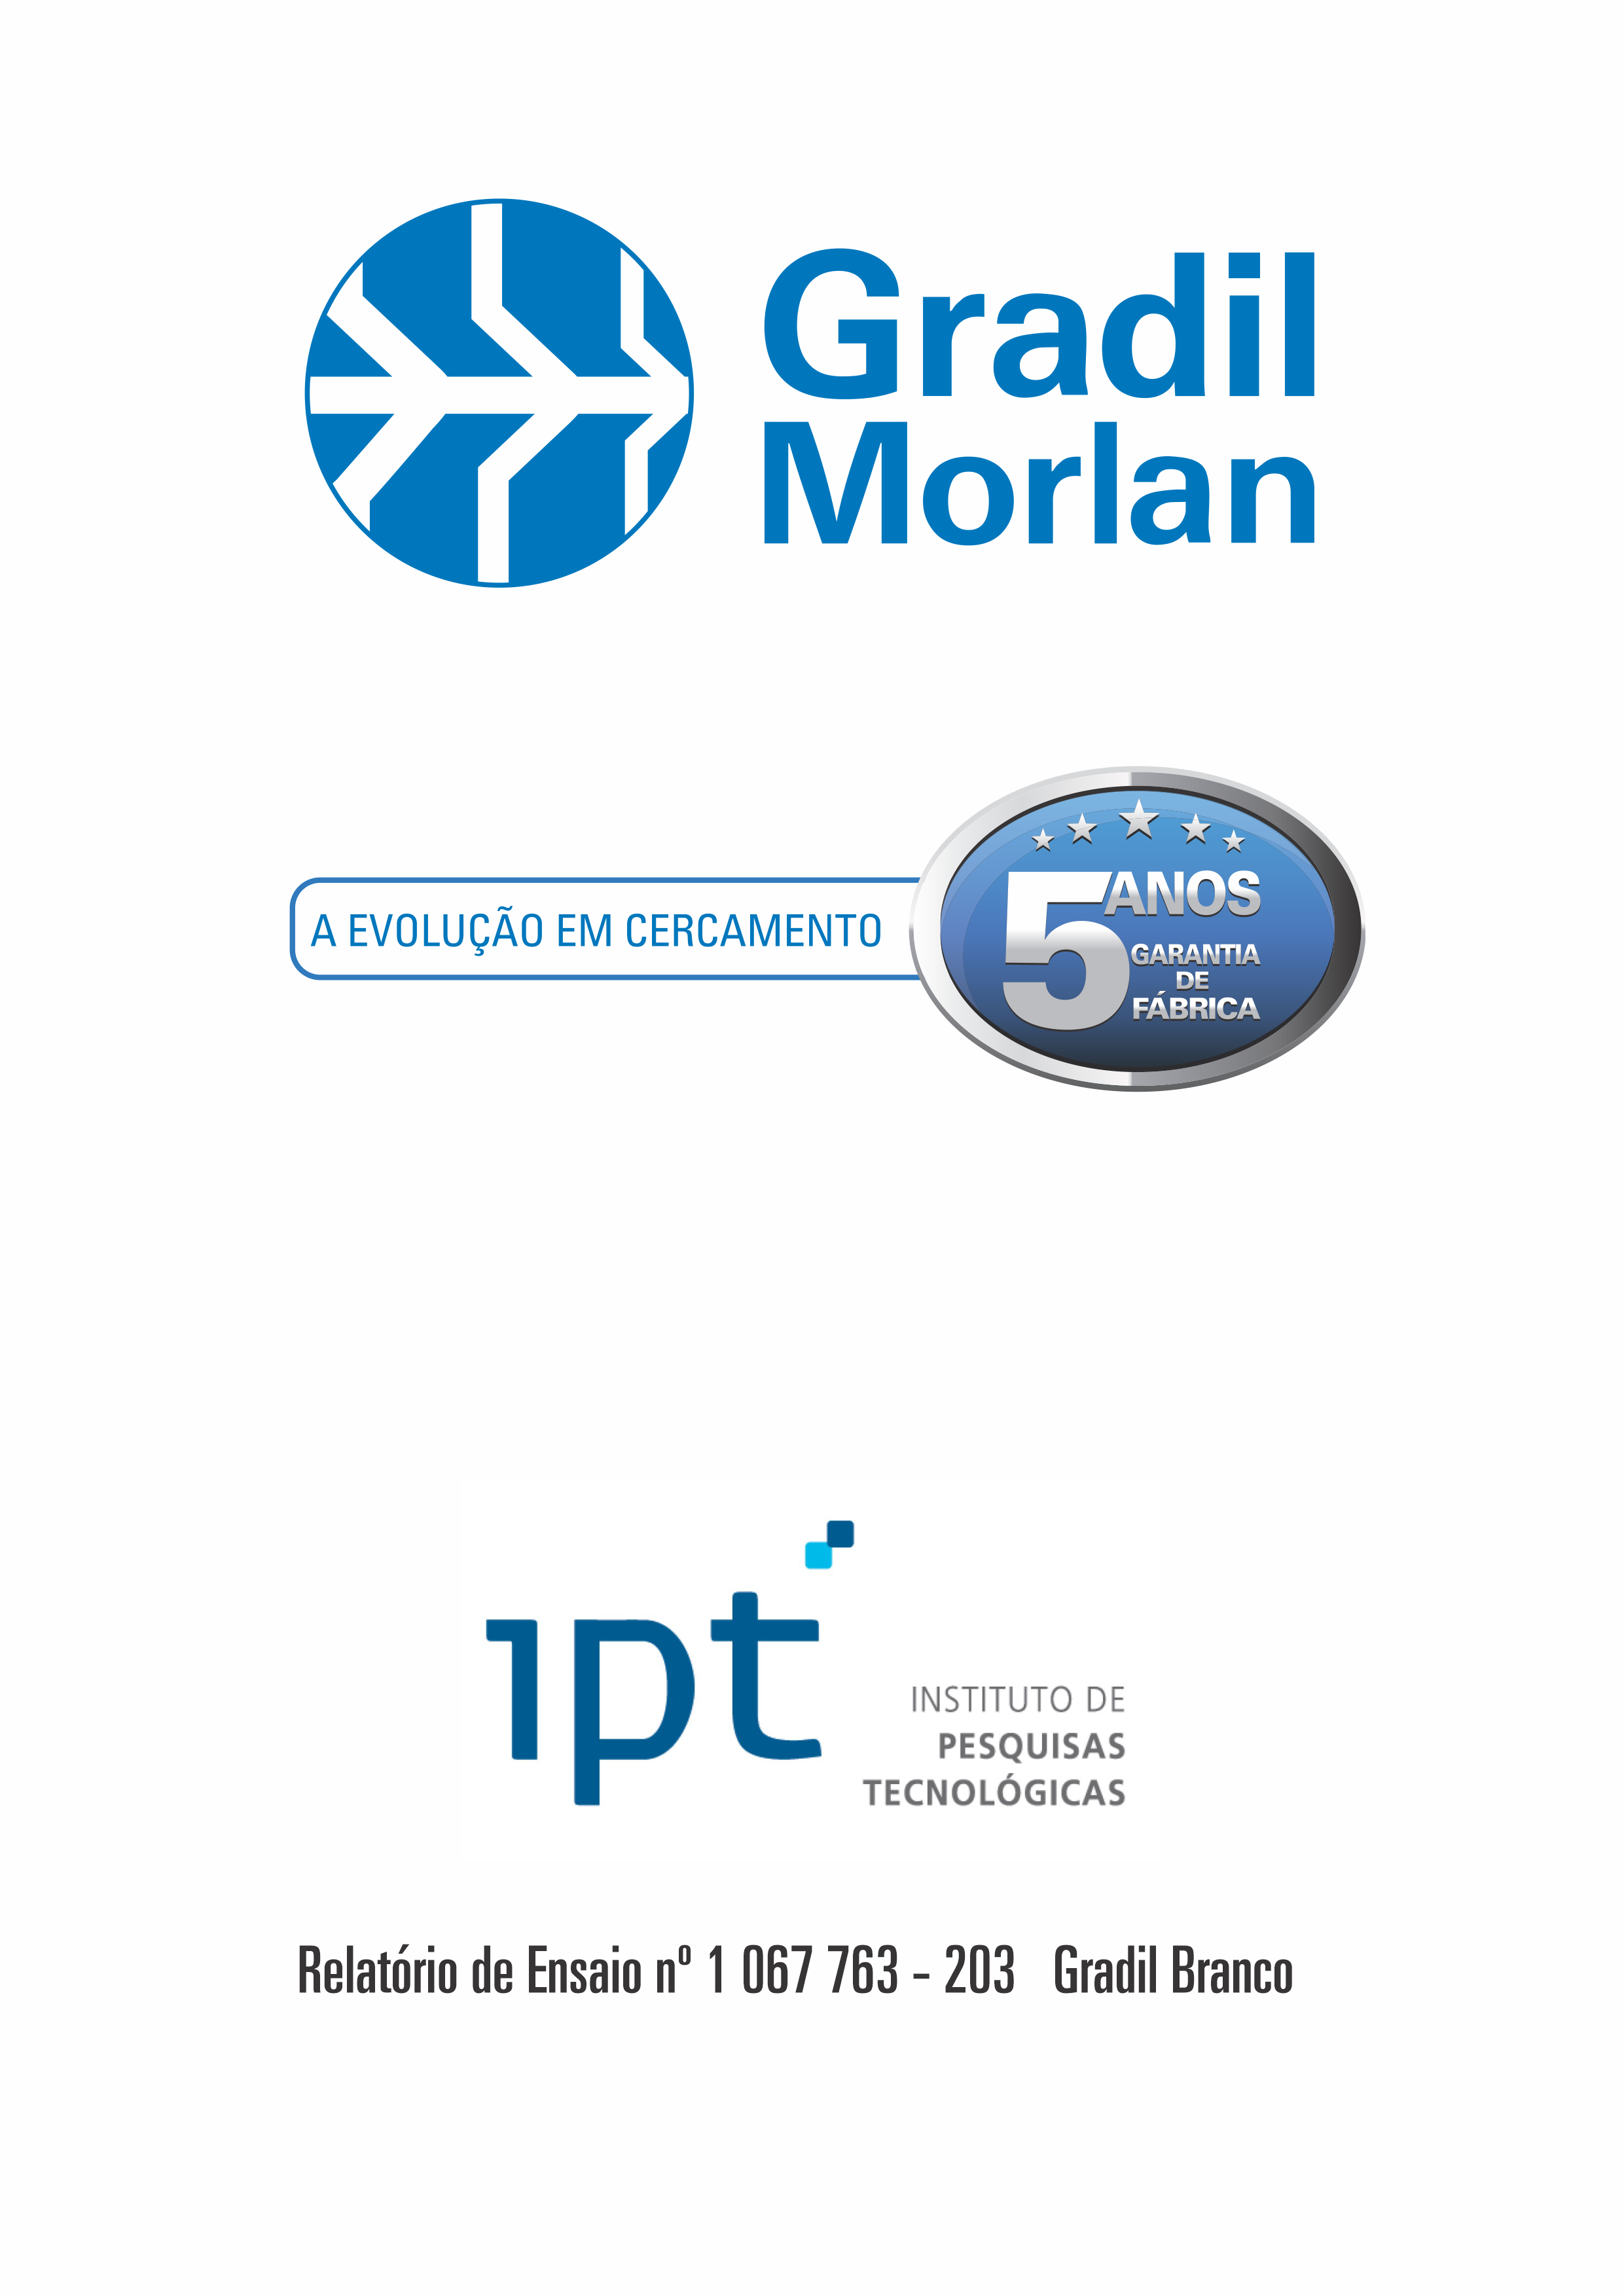 Gradil Morlan - Laudo IPT - cor branca